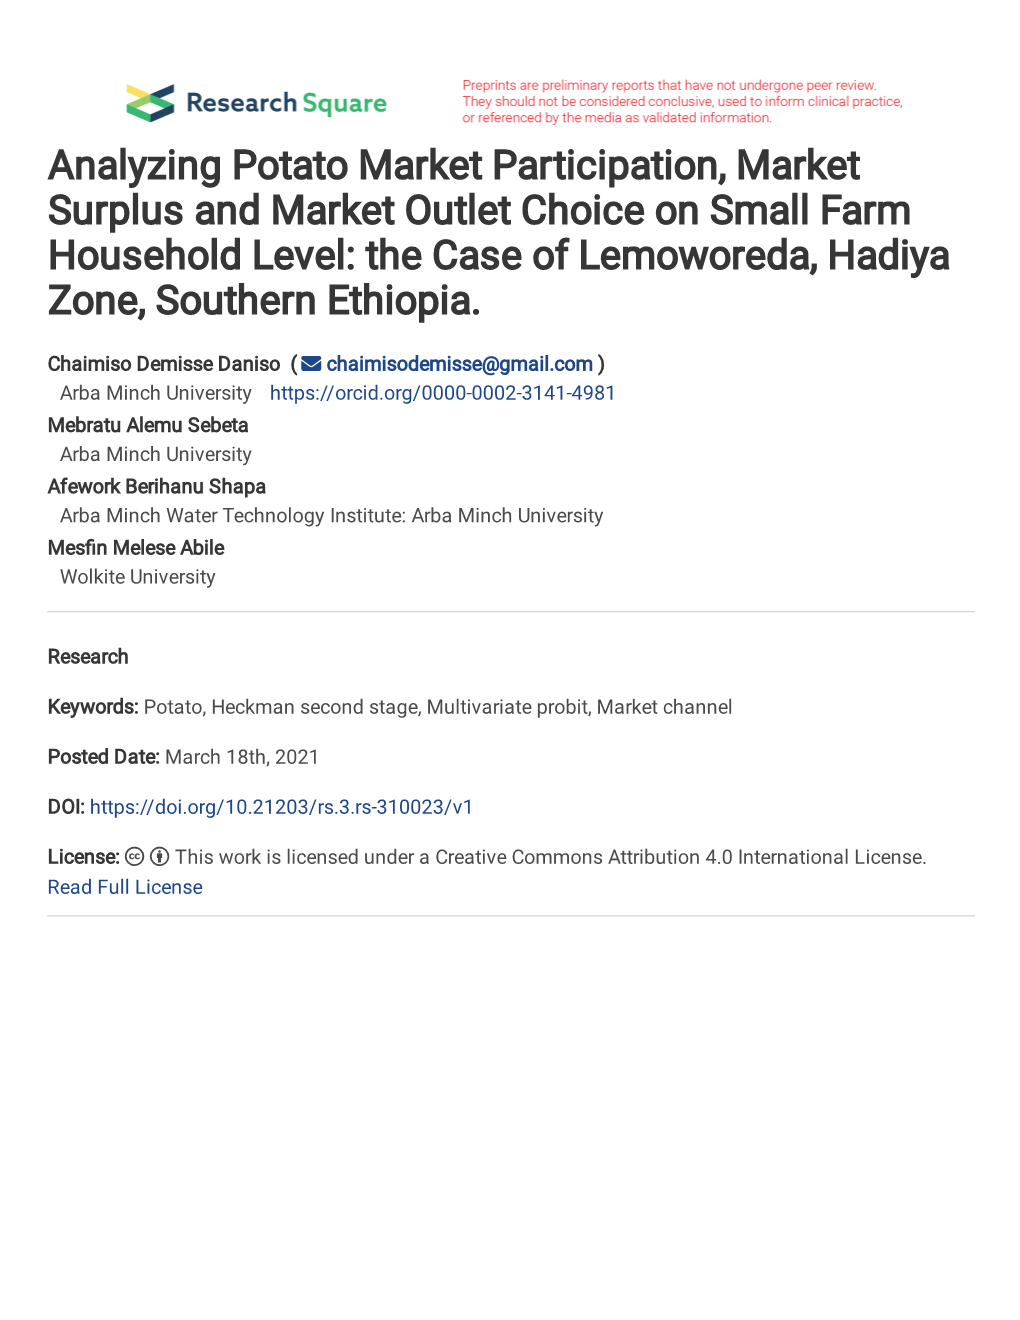 Analyzing Potato Market Participation, Market Surplus and Market Outlet Choice on Small Farm Household Level: the Case of Lemoworeda, Hadiya Zone, Southern Ethiopia